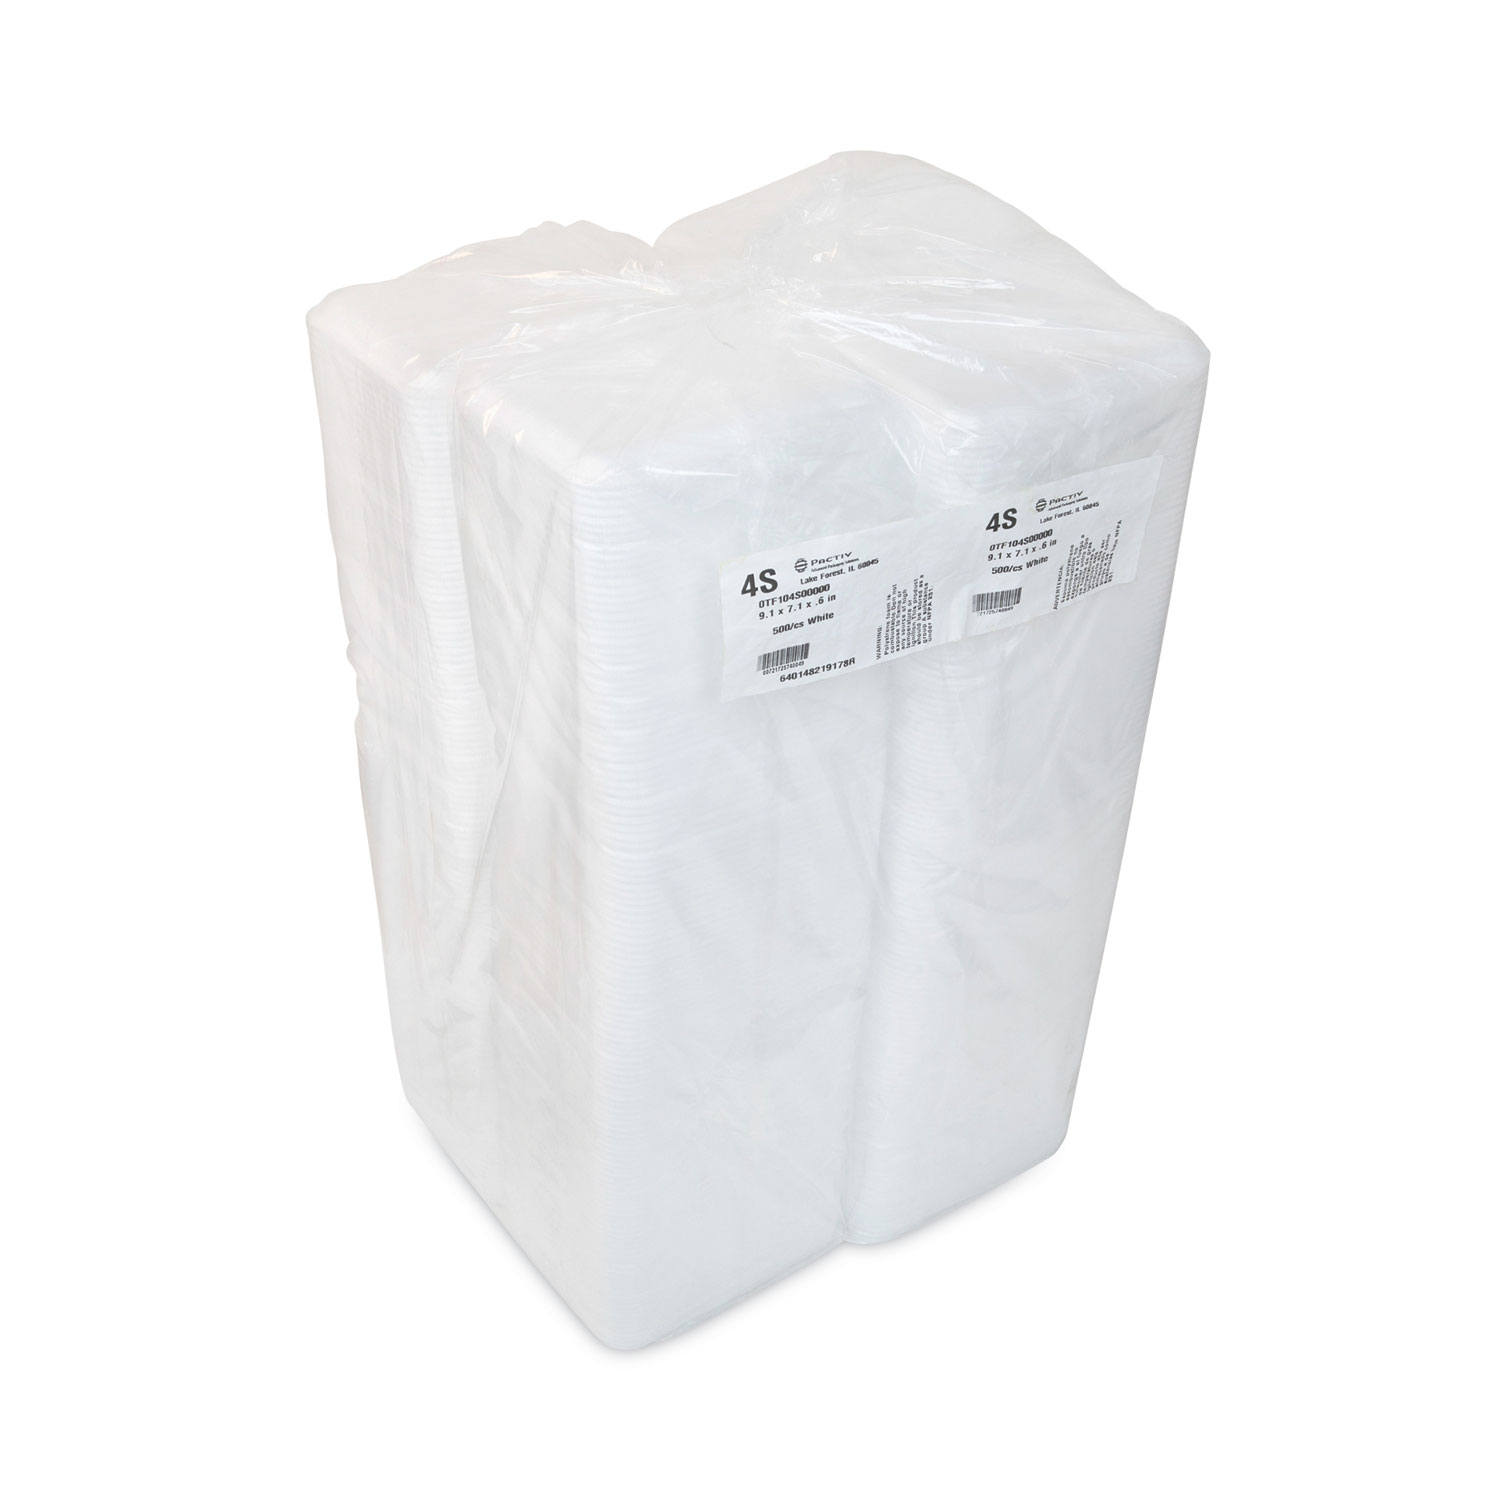 CKF 88134 (#34/4S) White Foam Meat Tray 9 1/4 x 7 1/4 x 1/2 - 250/Pack